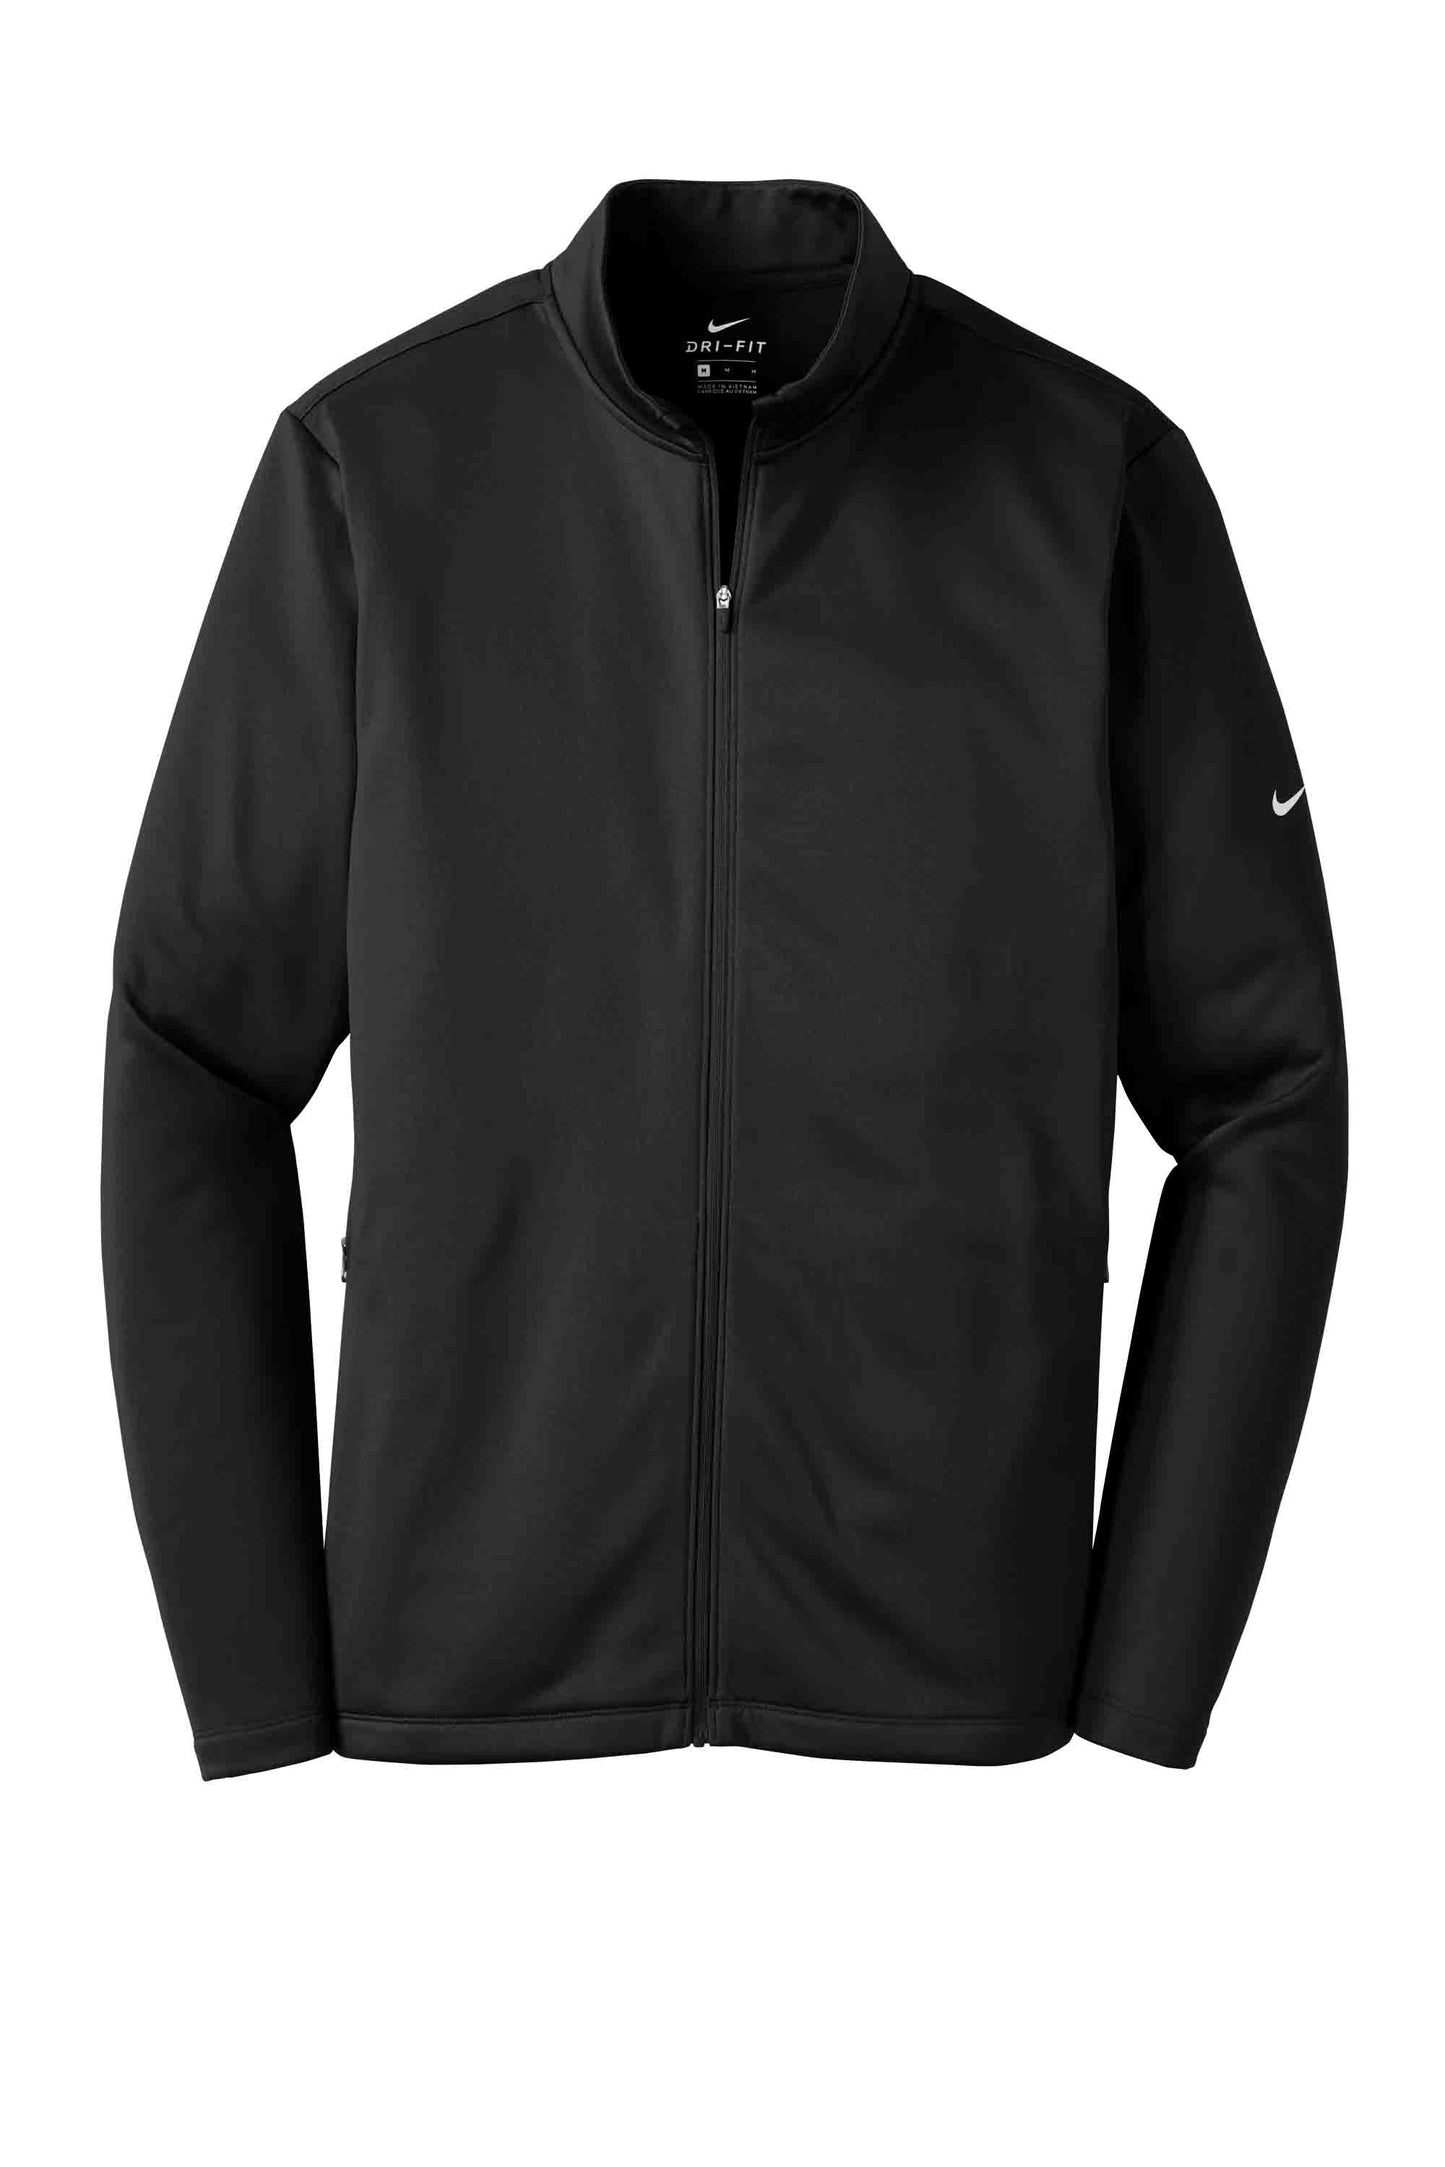 Nike Dri-FIT Midweight Jacket